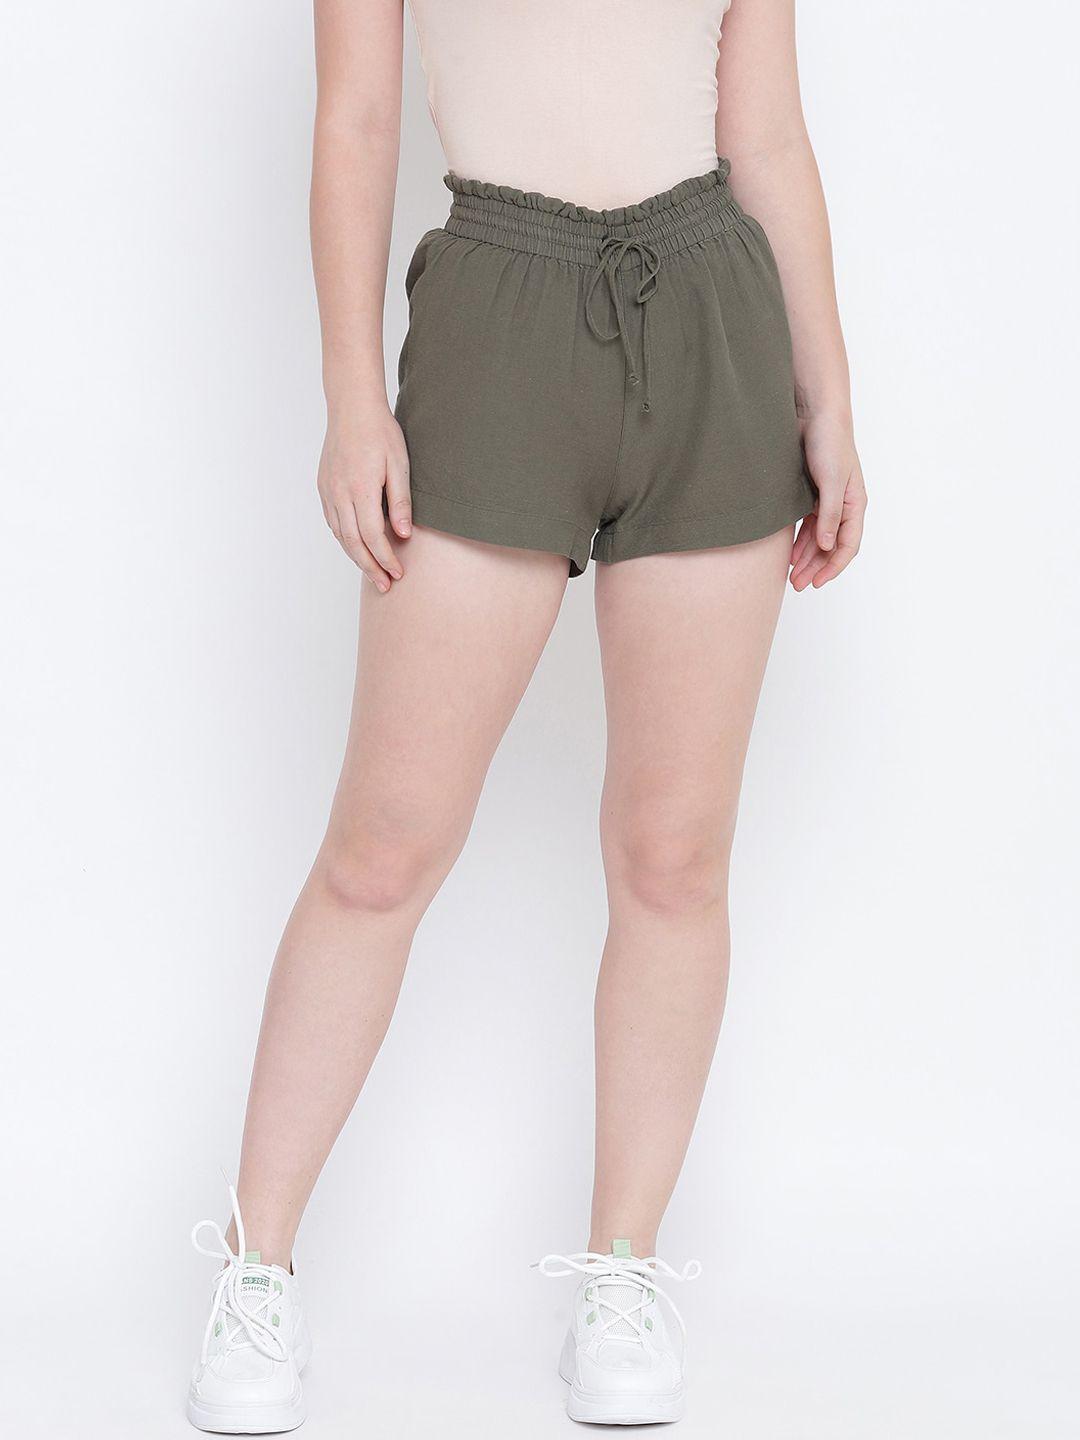 oxolloxo women khaki regular shorts